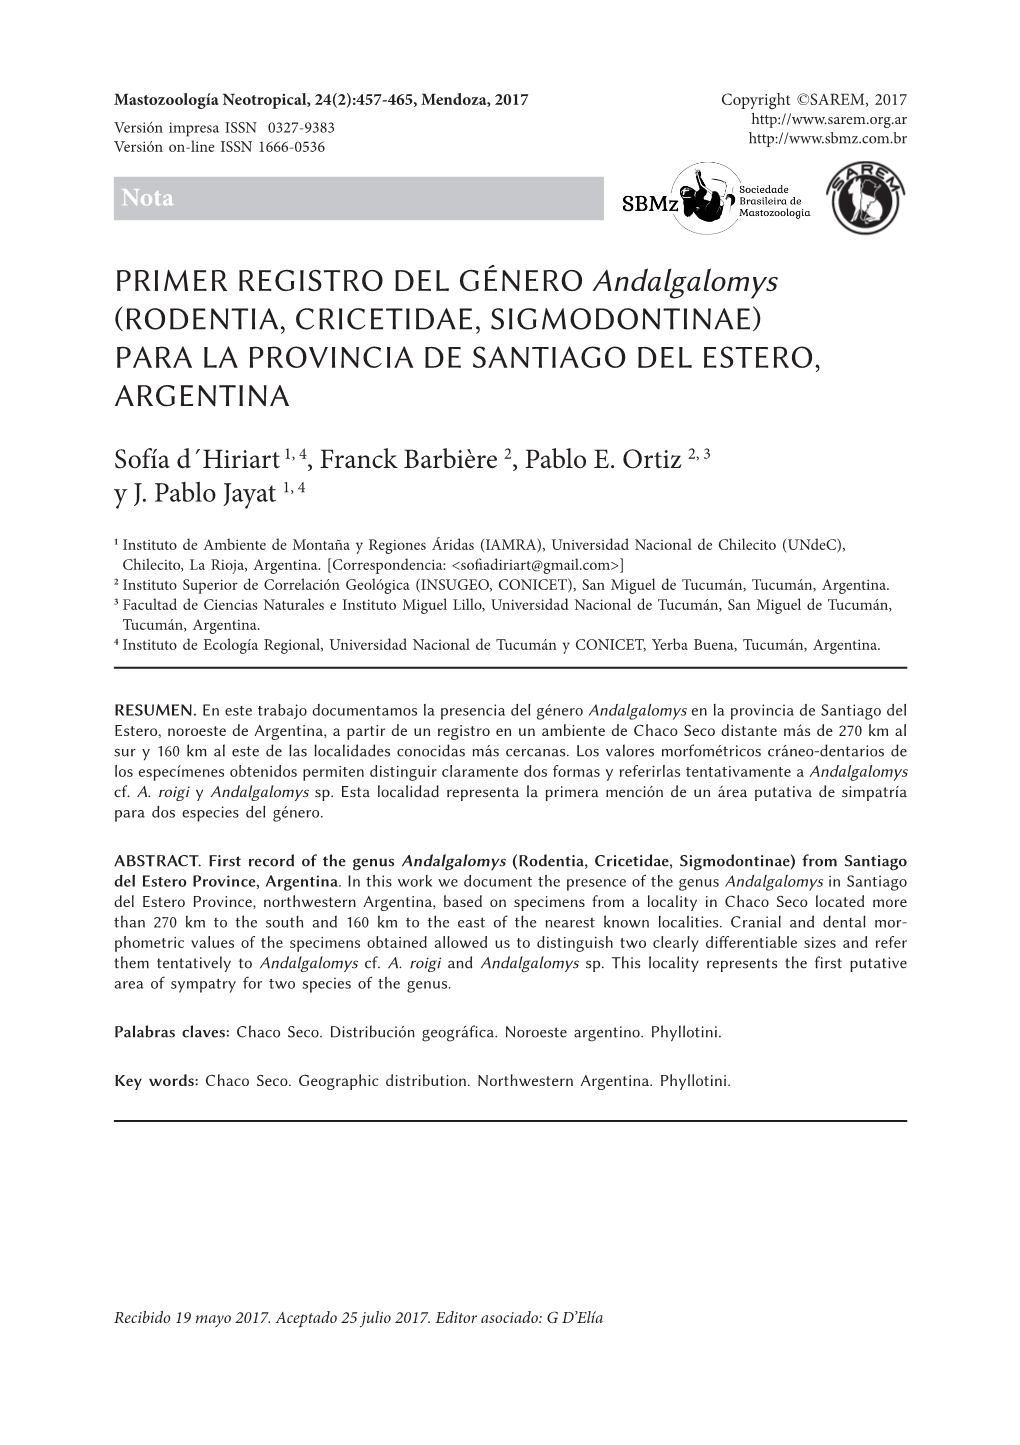 Rodentia, Cricetidae, Sigmodontinae) Para La Provincia De Santiago Del Estero, Argentina